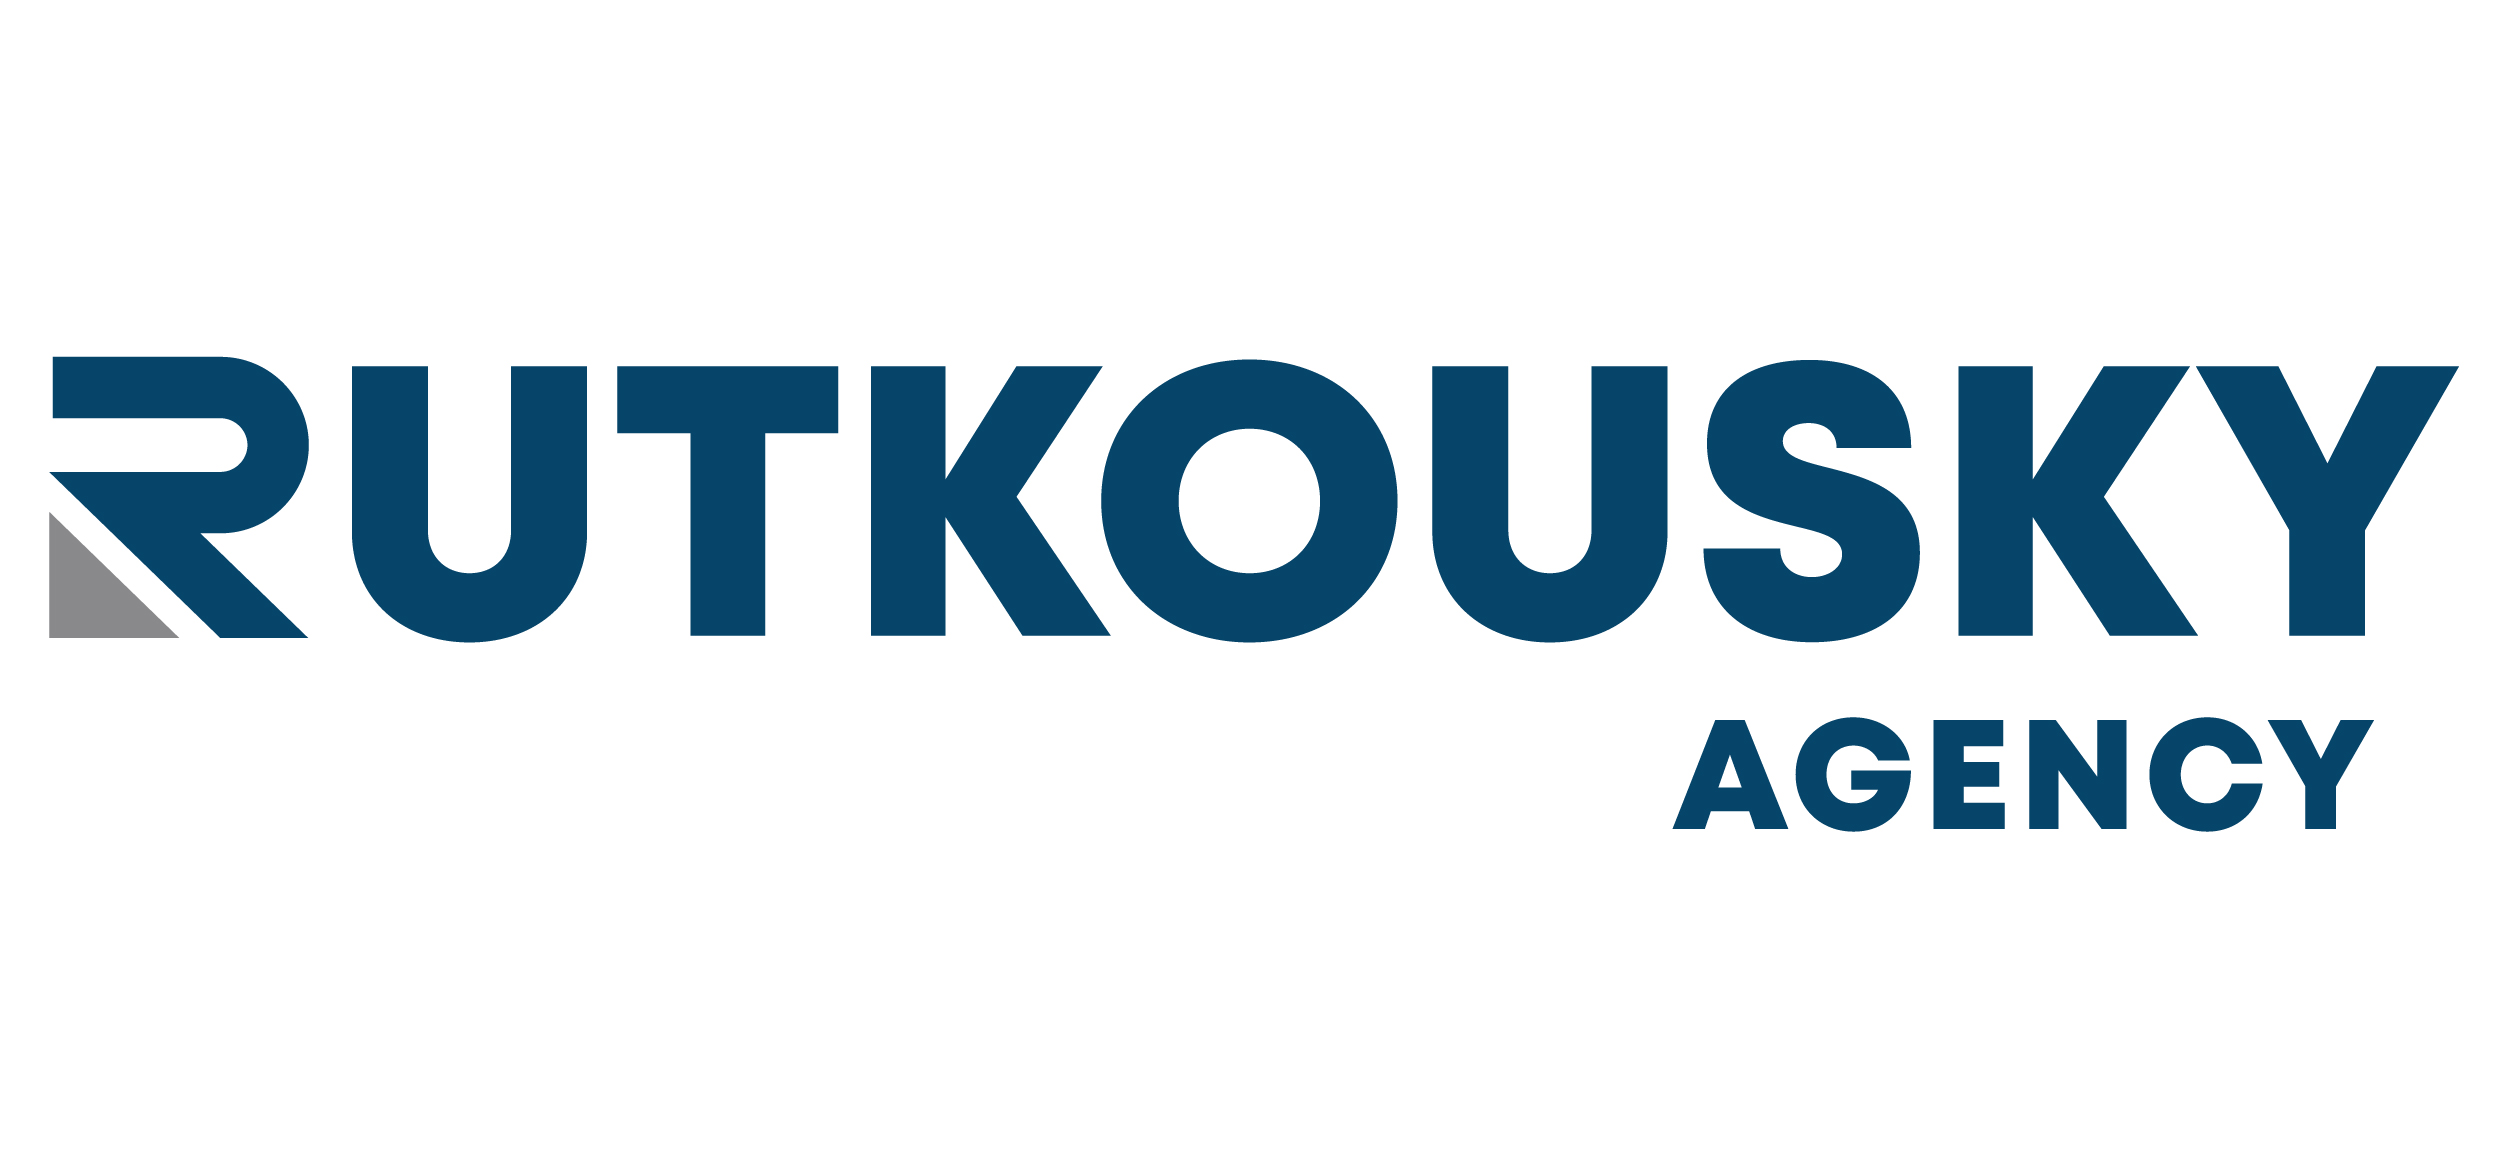 Rutkousky Agency